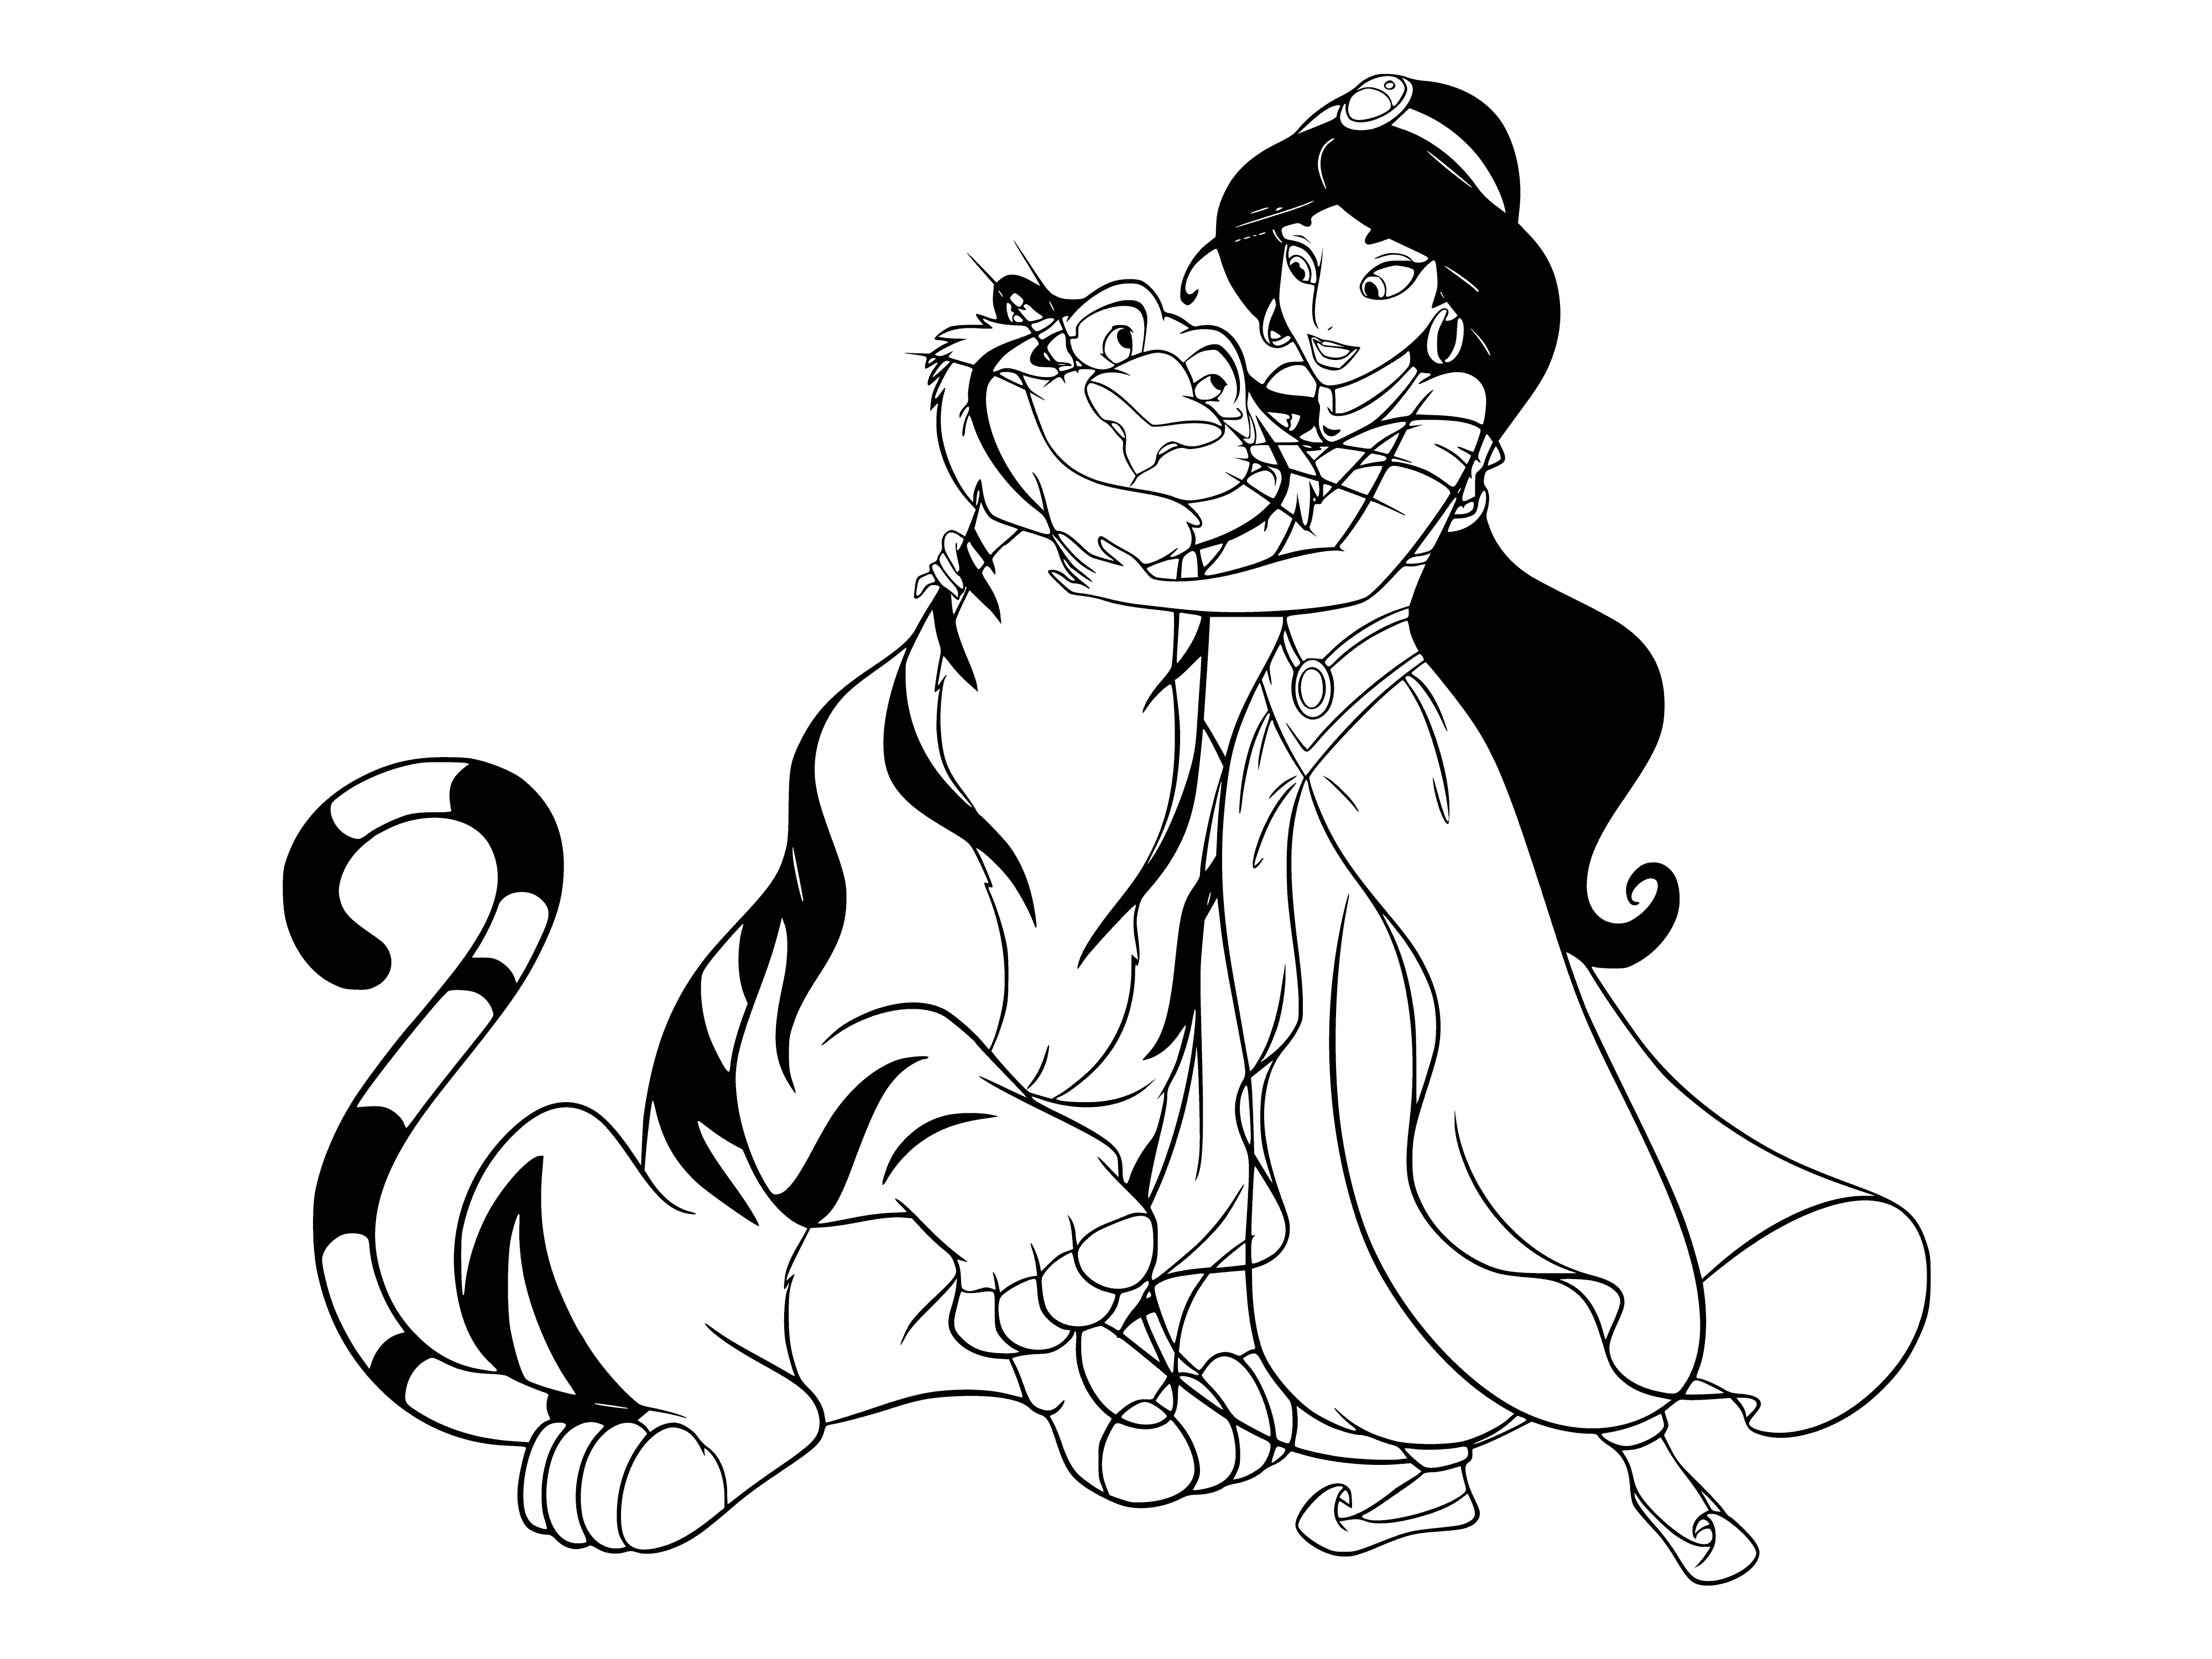 Jasmine and Raja coloring page